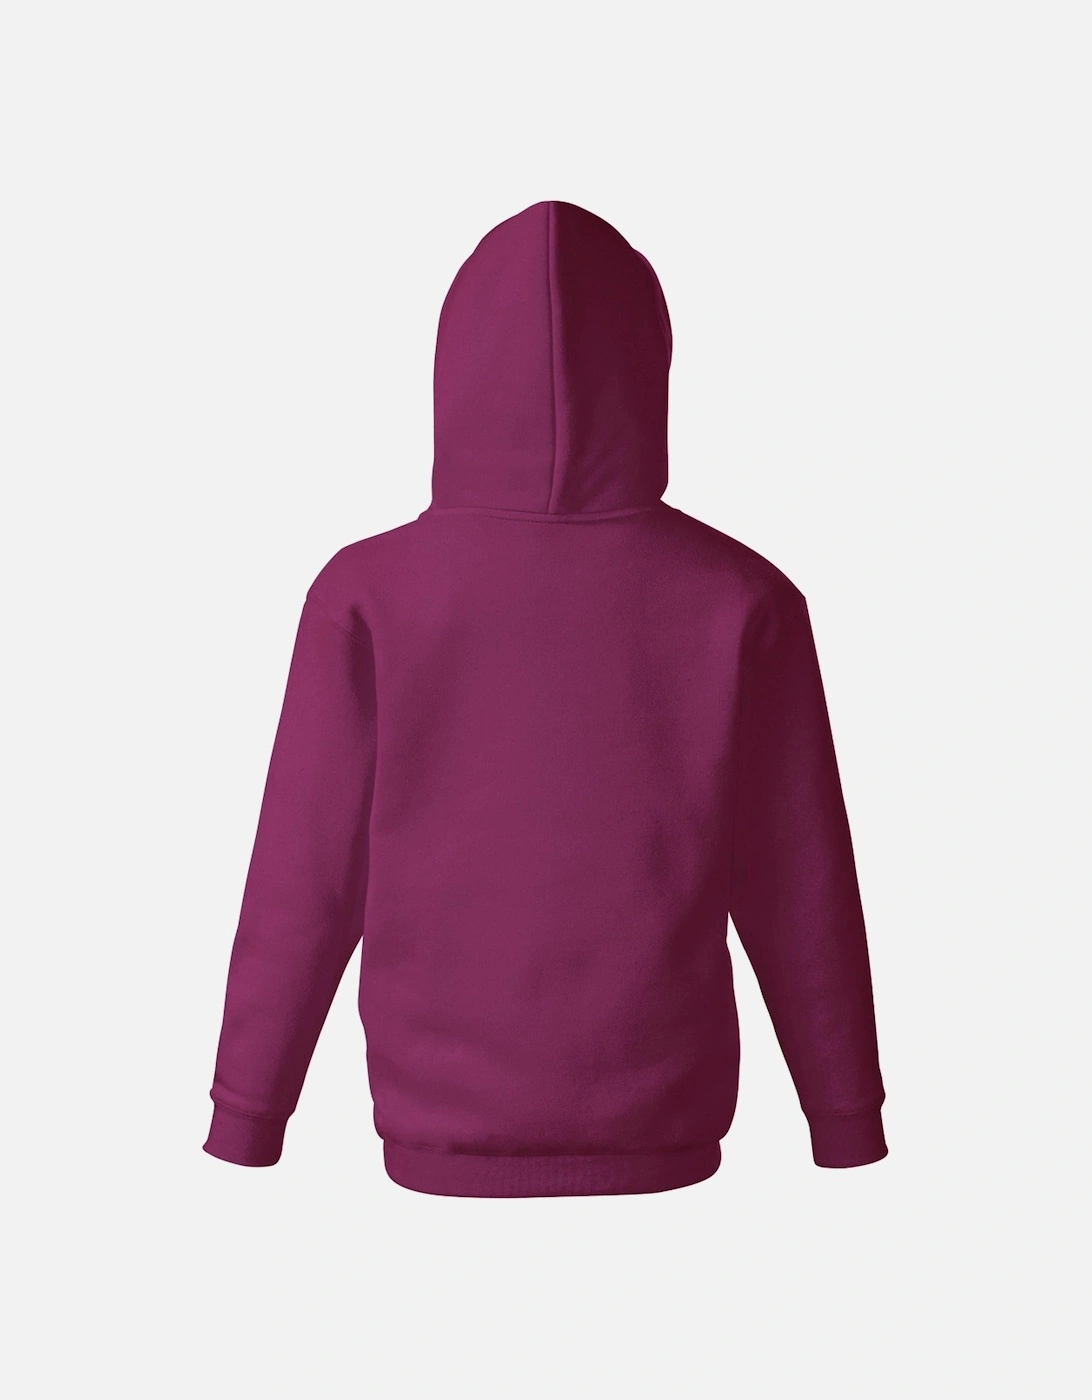 Childrens/Kids Unisex Hooded Sweatshirt Jacket